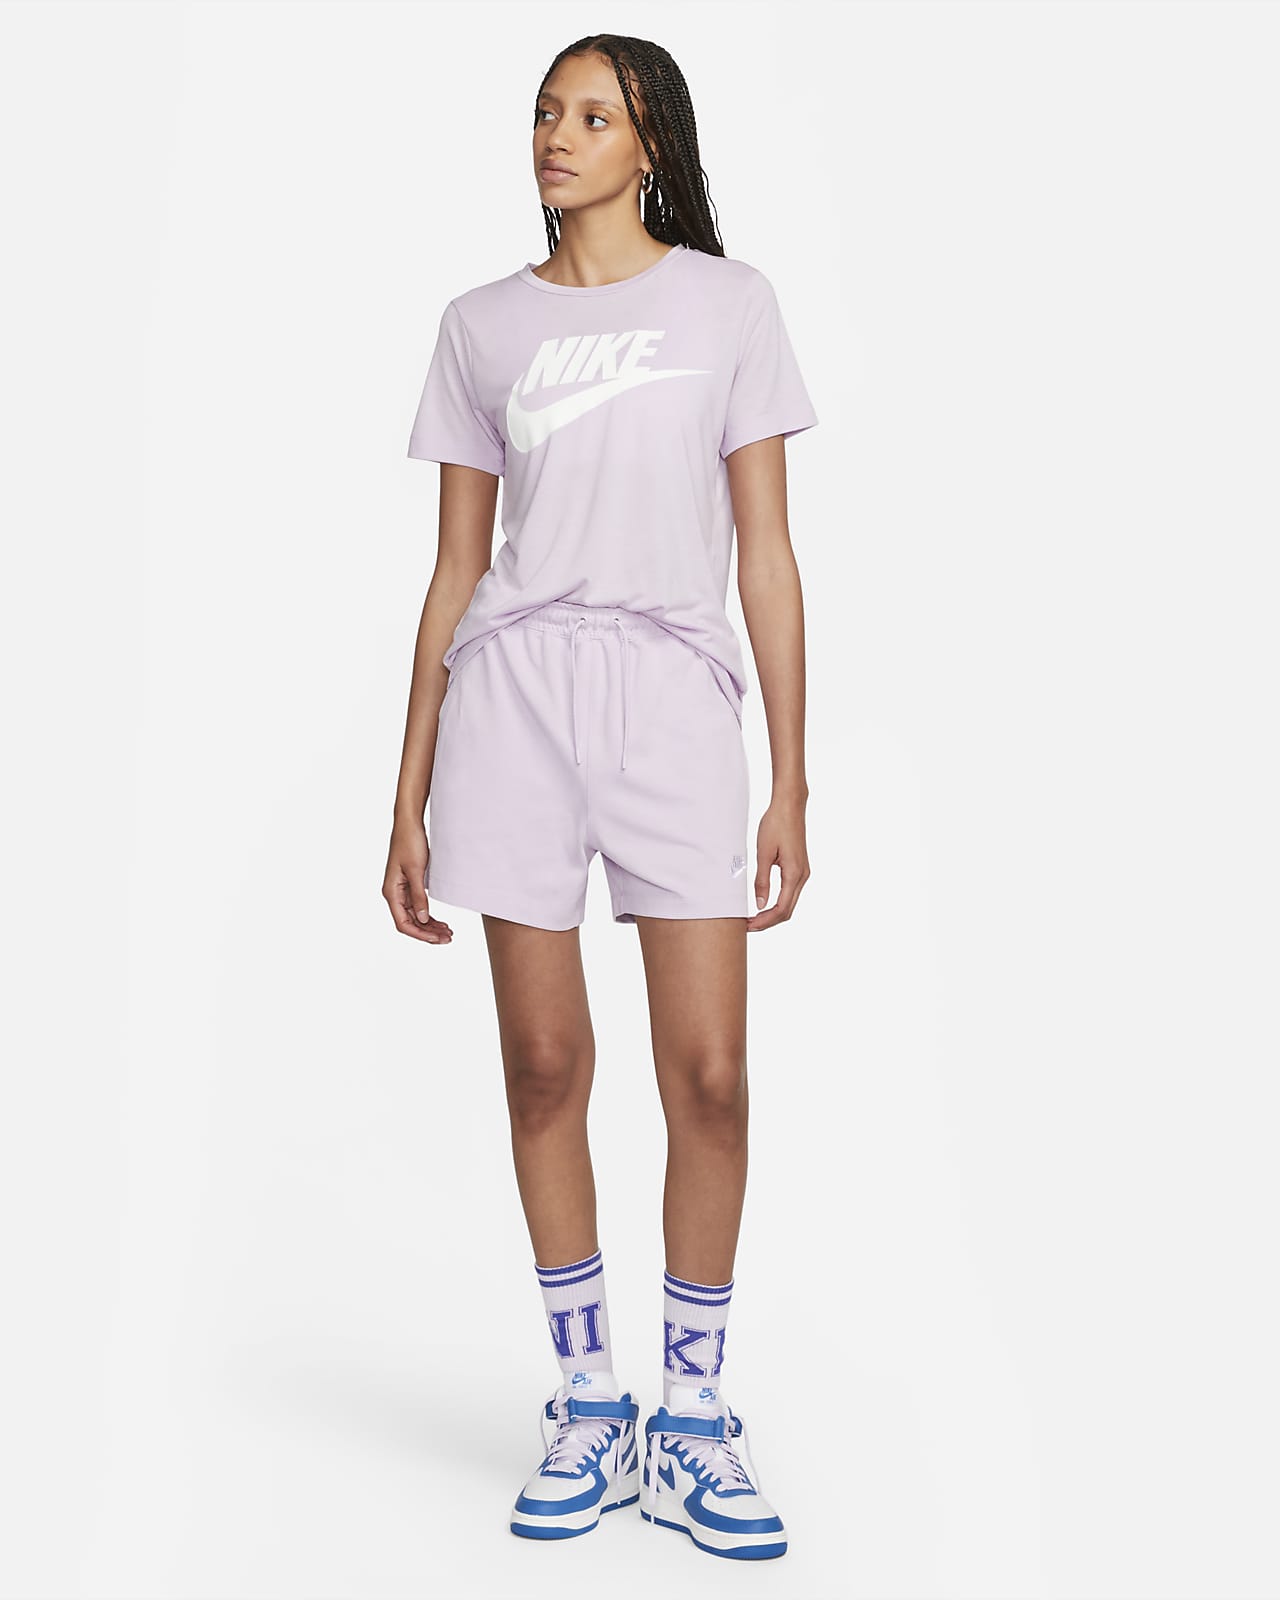 Nike - Boys White & Grey Cotton Shorts Set